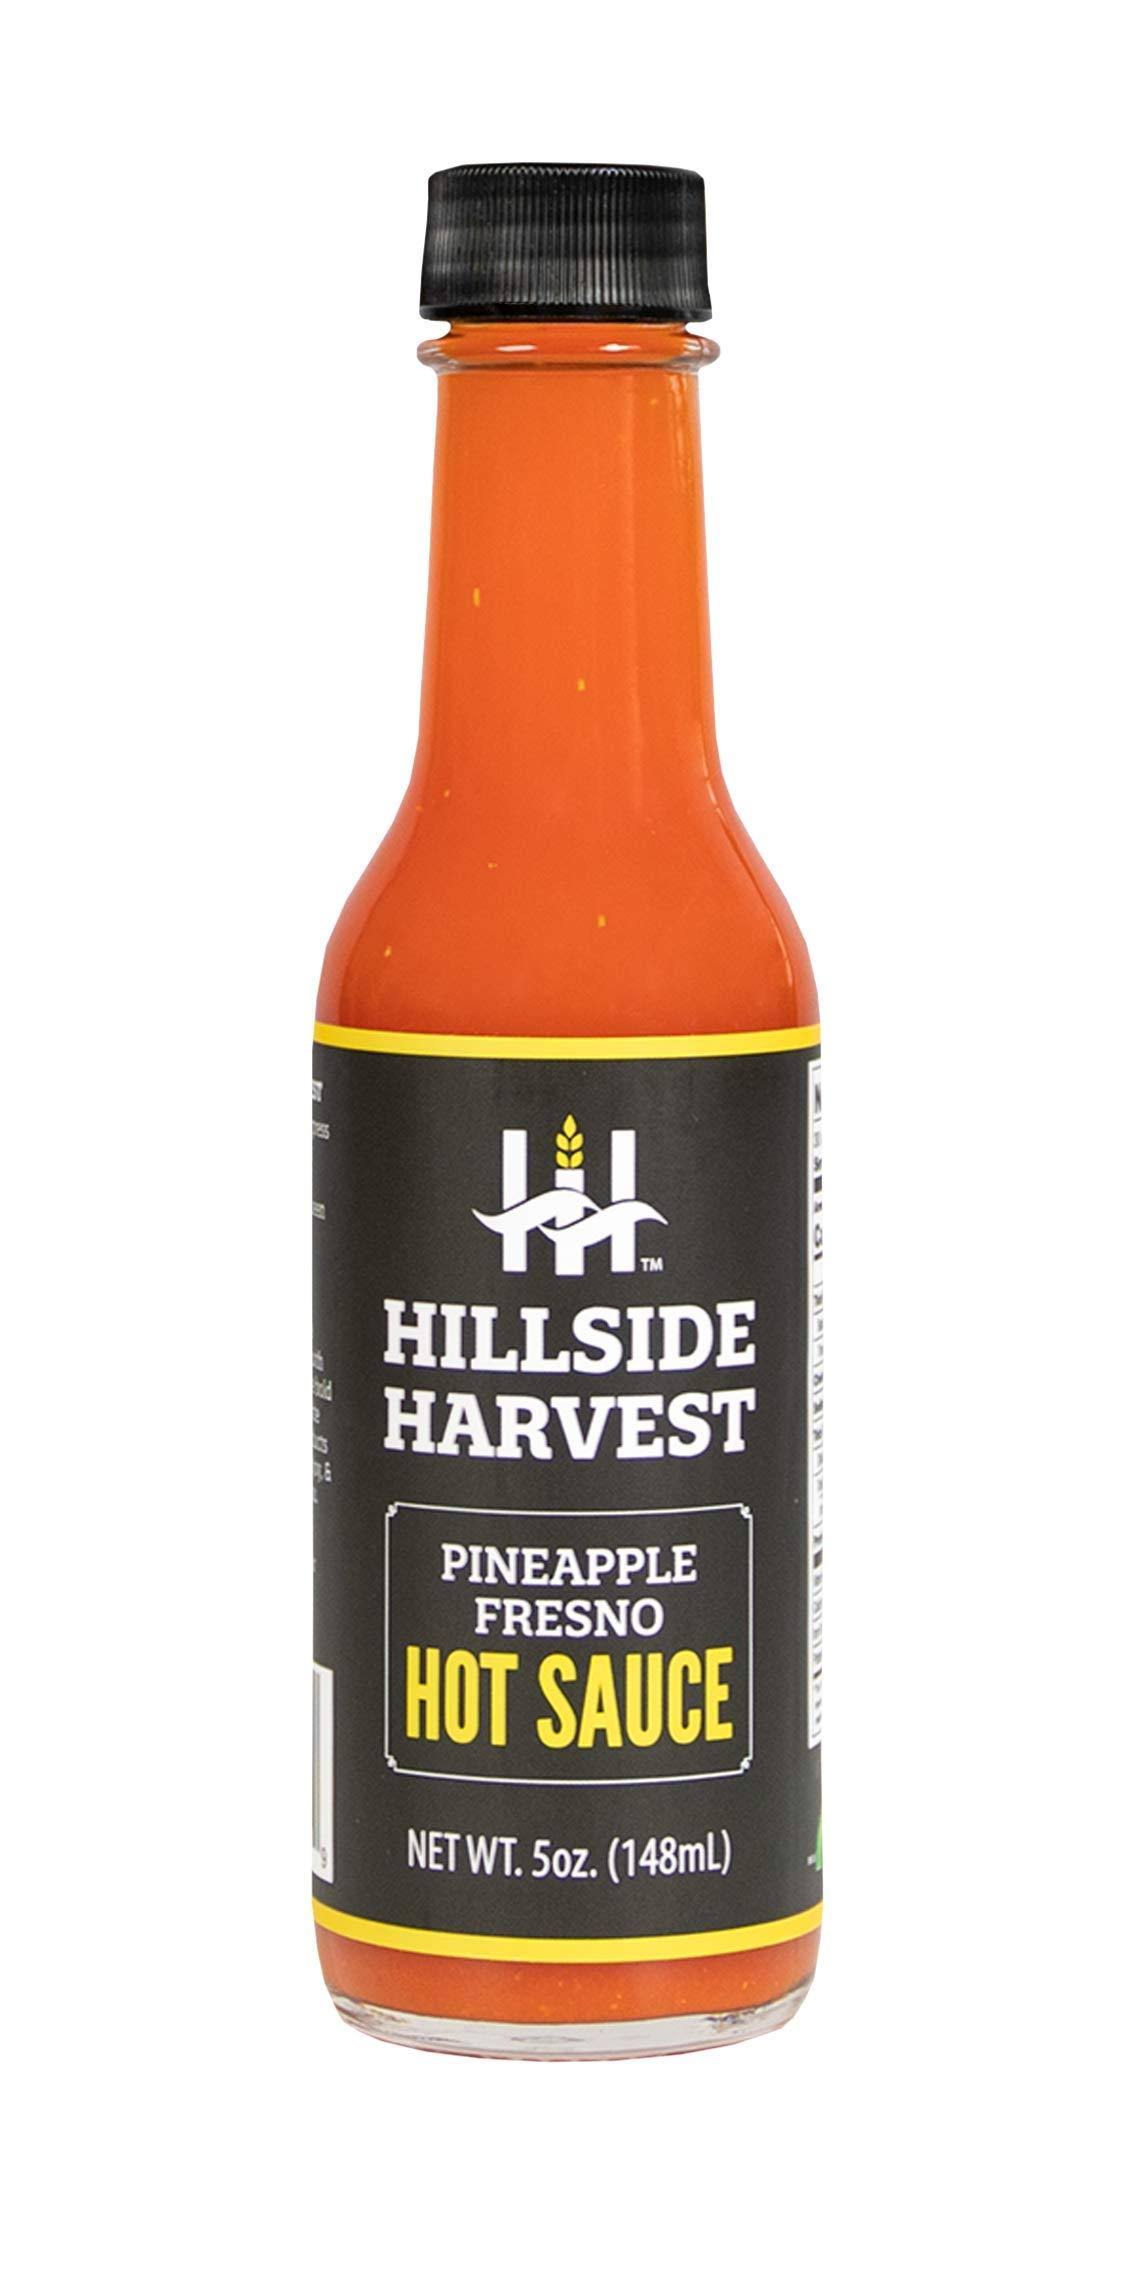 Hillside Harvest Pineapple Fresno Hot Sauce Set, Gourmet, Handcrafted